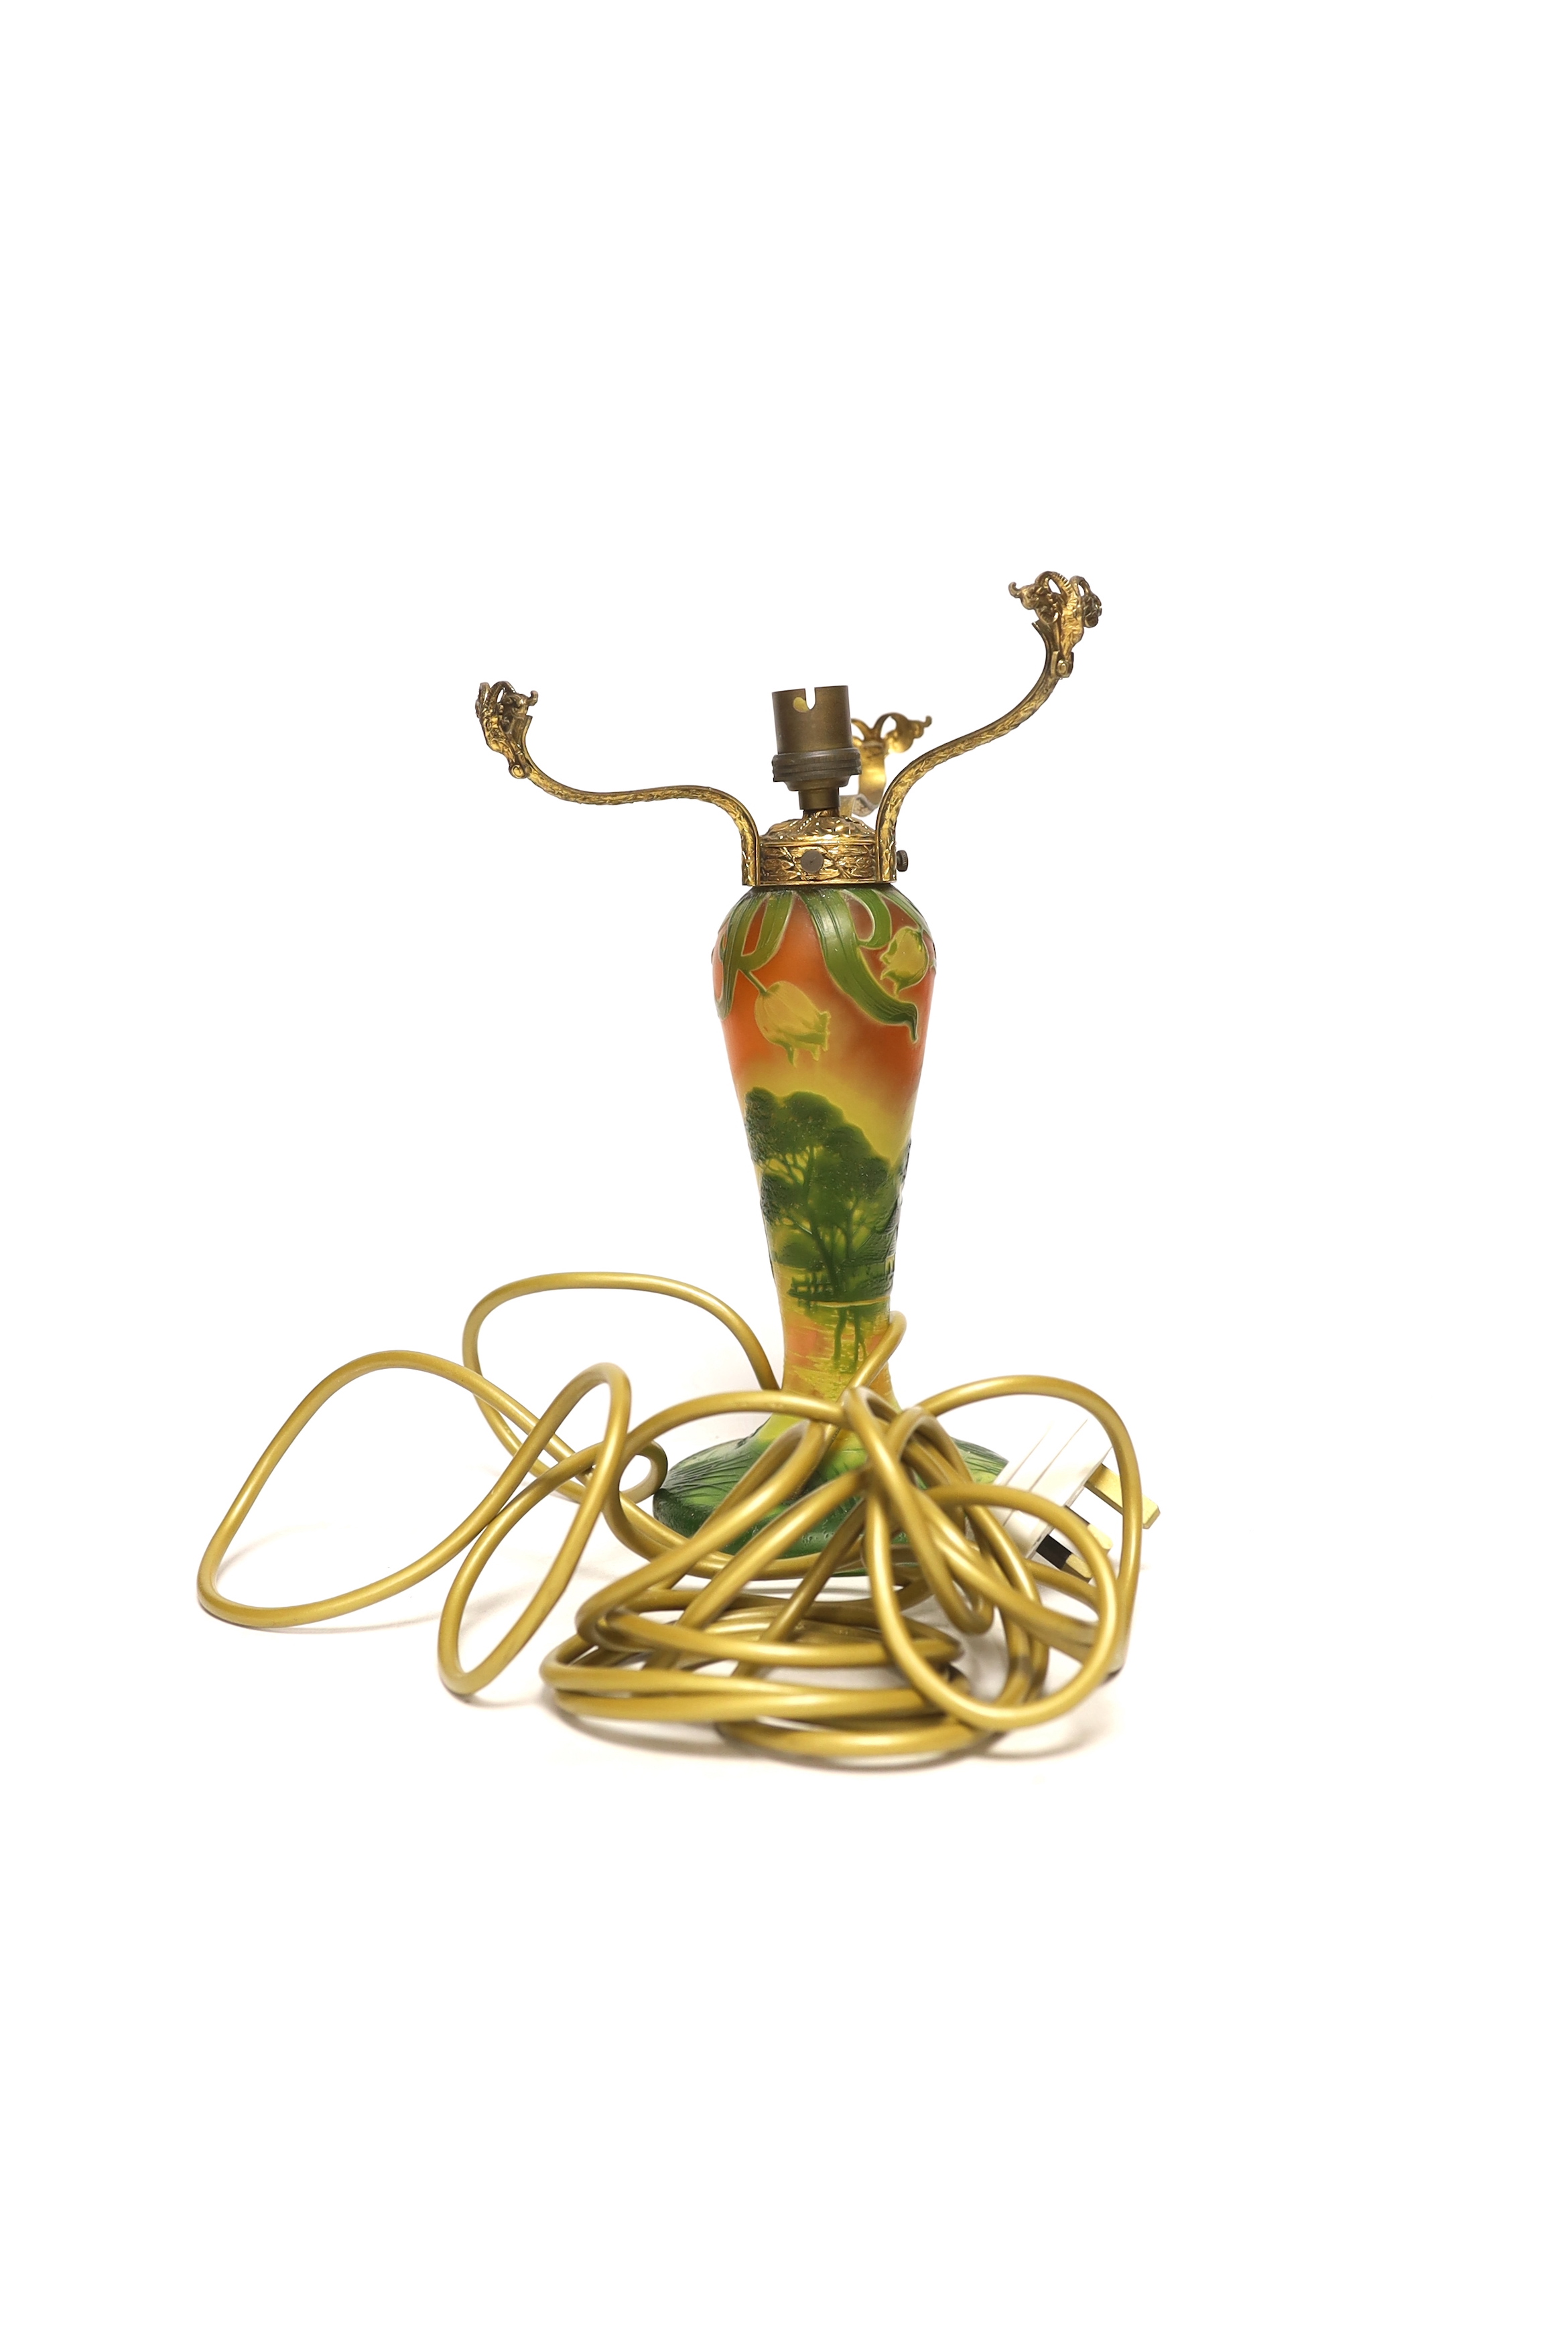 An Art Nouveau cameo glass lamp base by J. Michael, Paris, gilt metal mounted, 27cm high including - Image 2 of 4